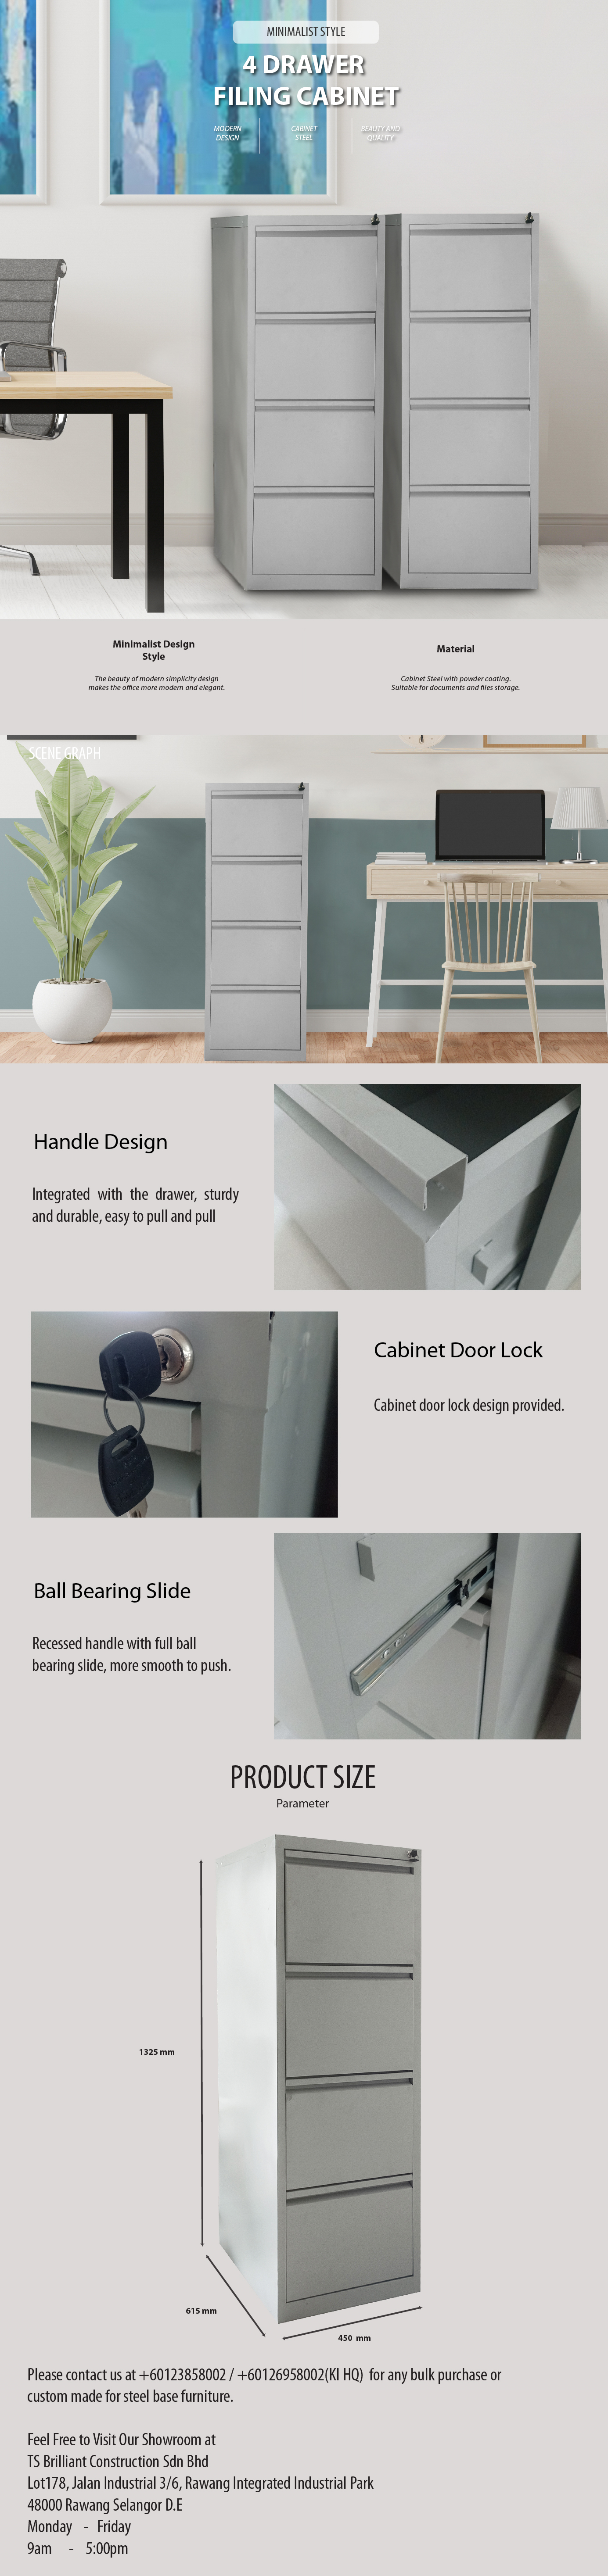 Description Filing cabinet-01.jpg